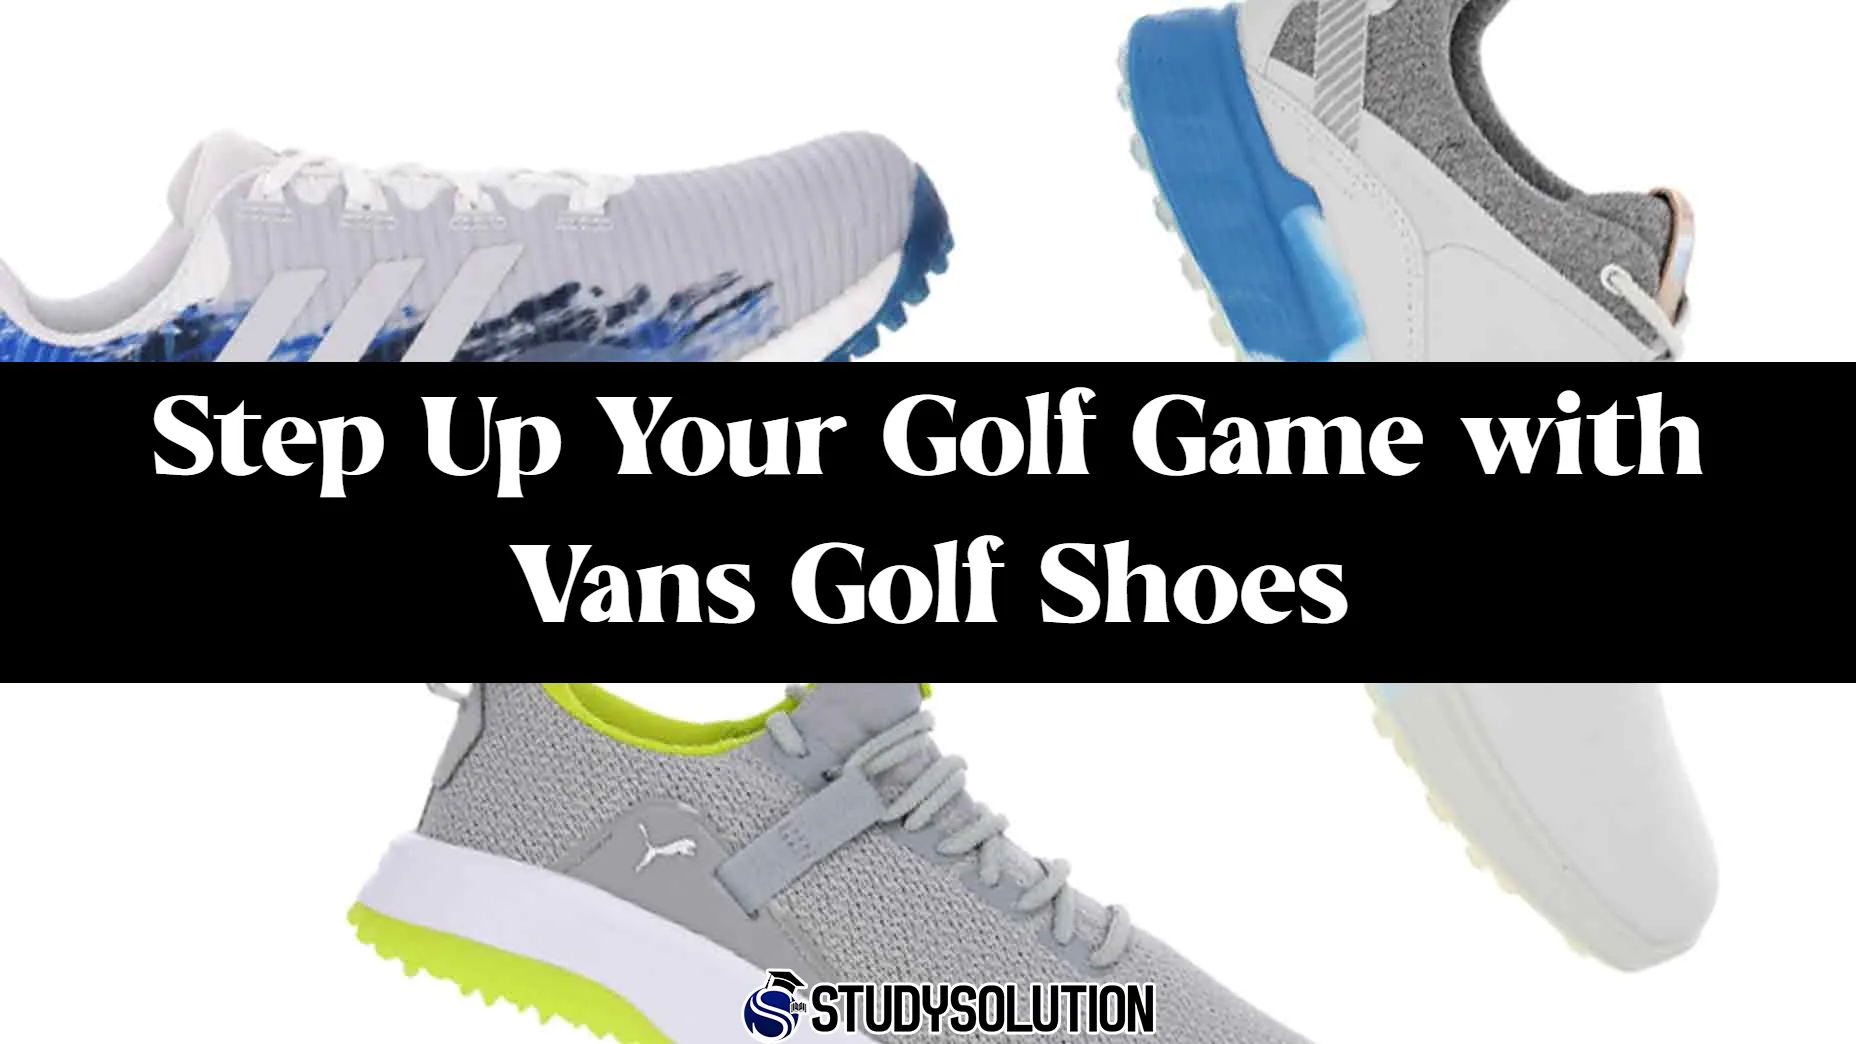 Vans Golf Shoes